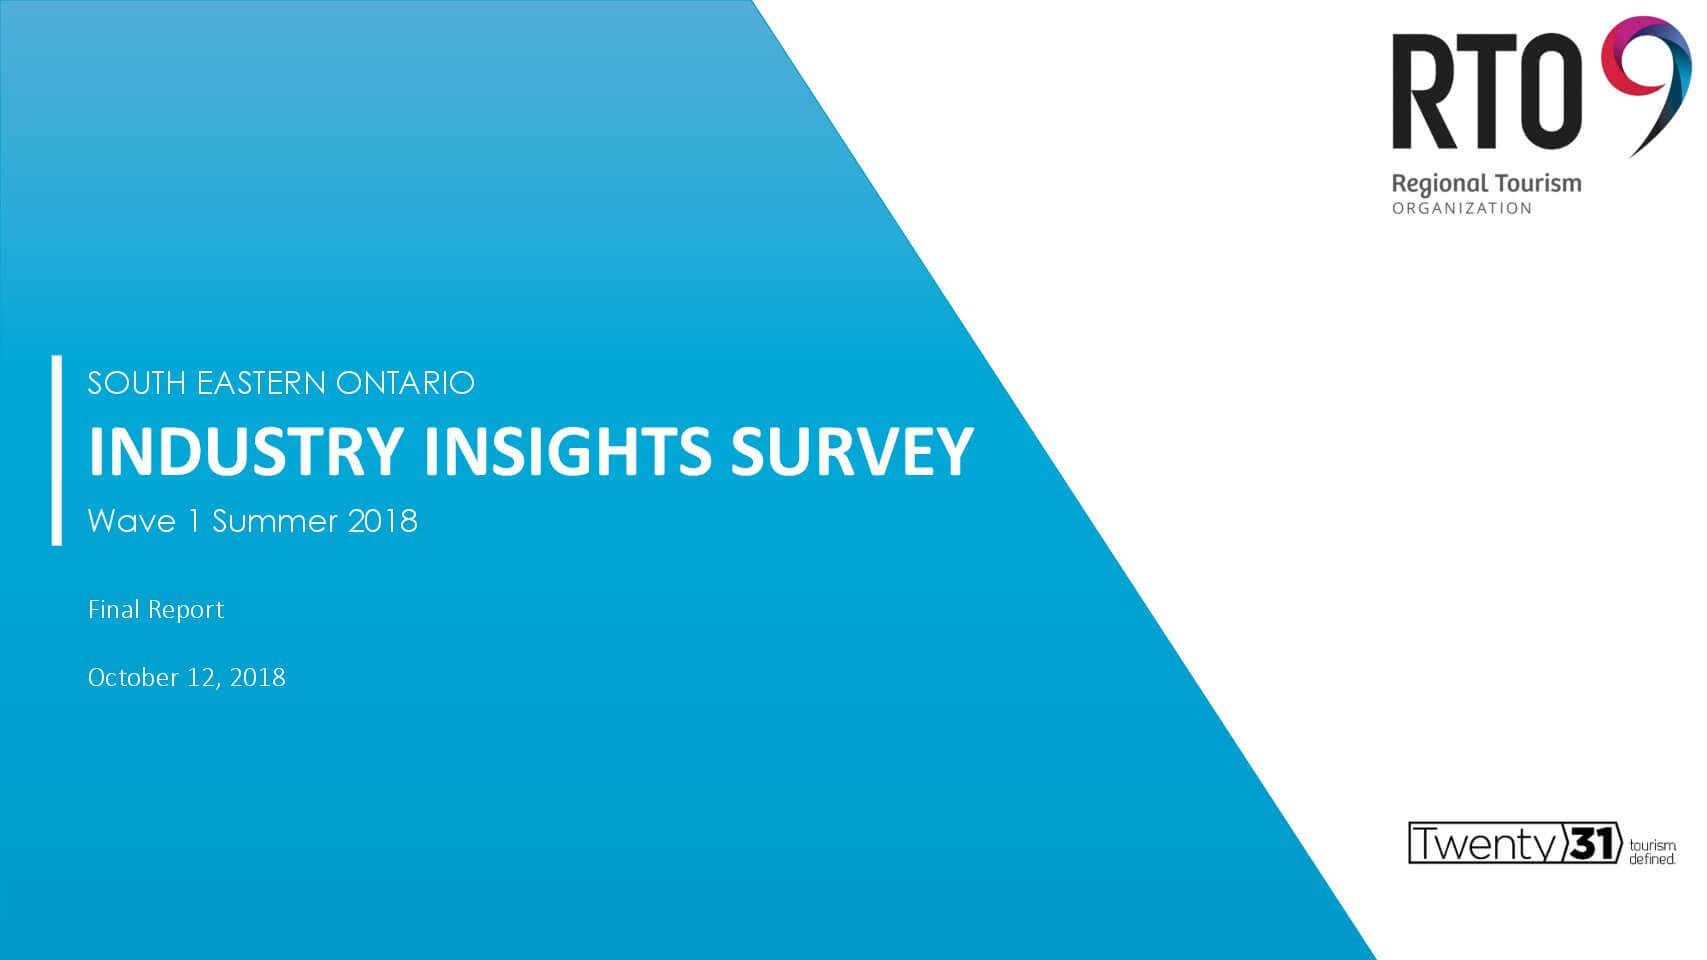 RTO9_Industry-Insights-Survey_Final-Report-pdf